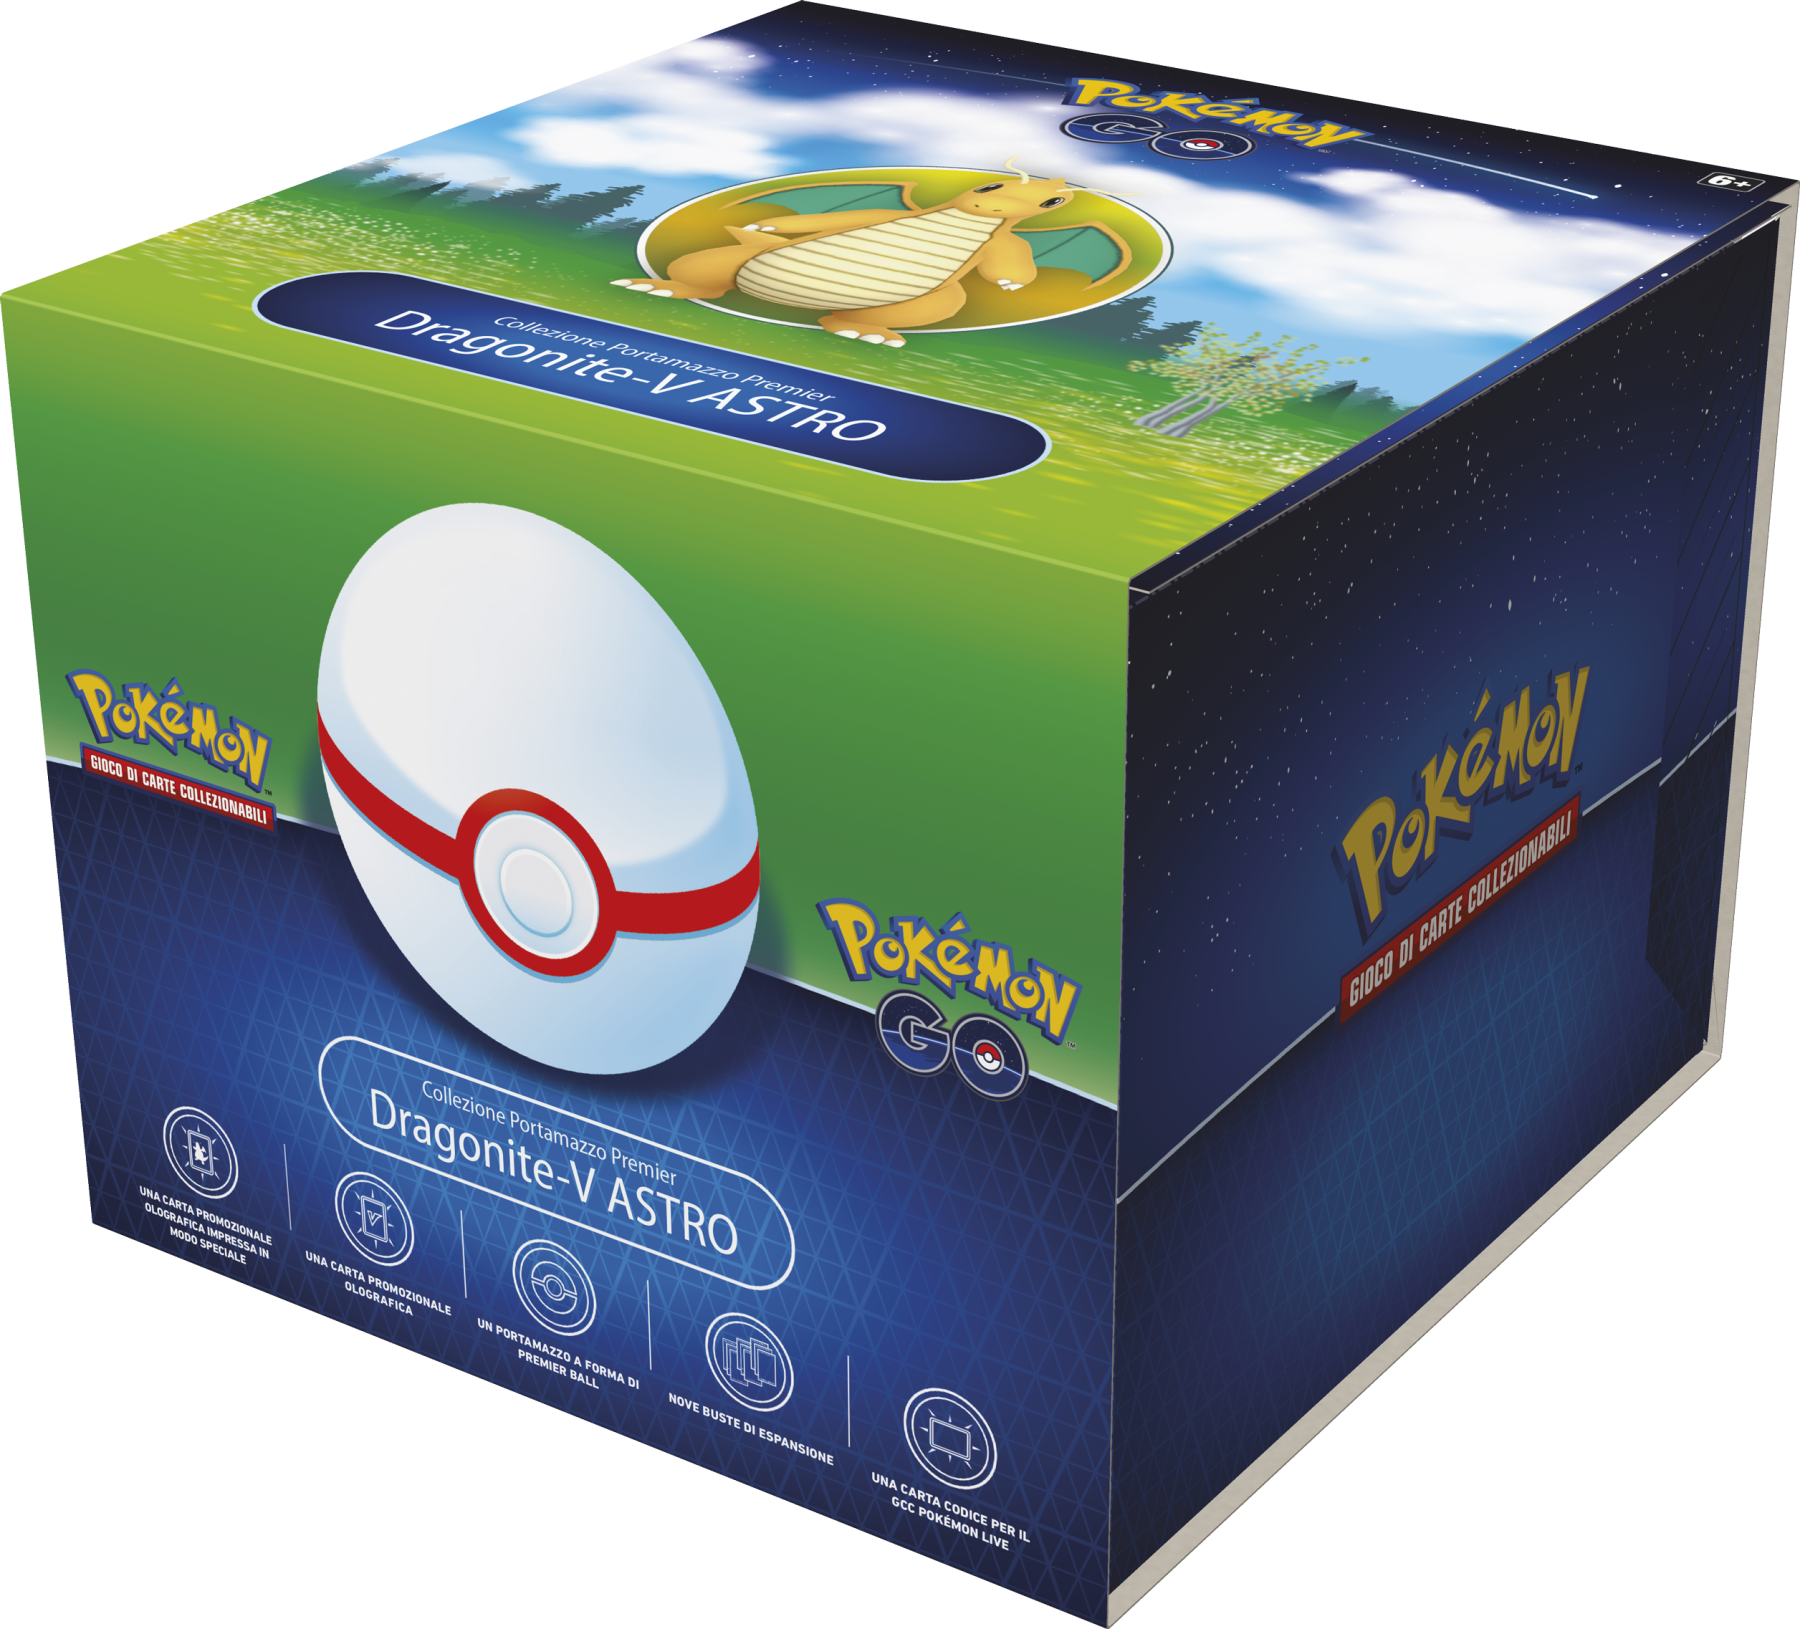 Pokemon 10.5 pokemon go collezione portamazzo premier dragonite- v astro - POKEMON